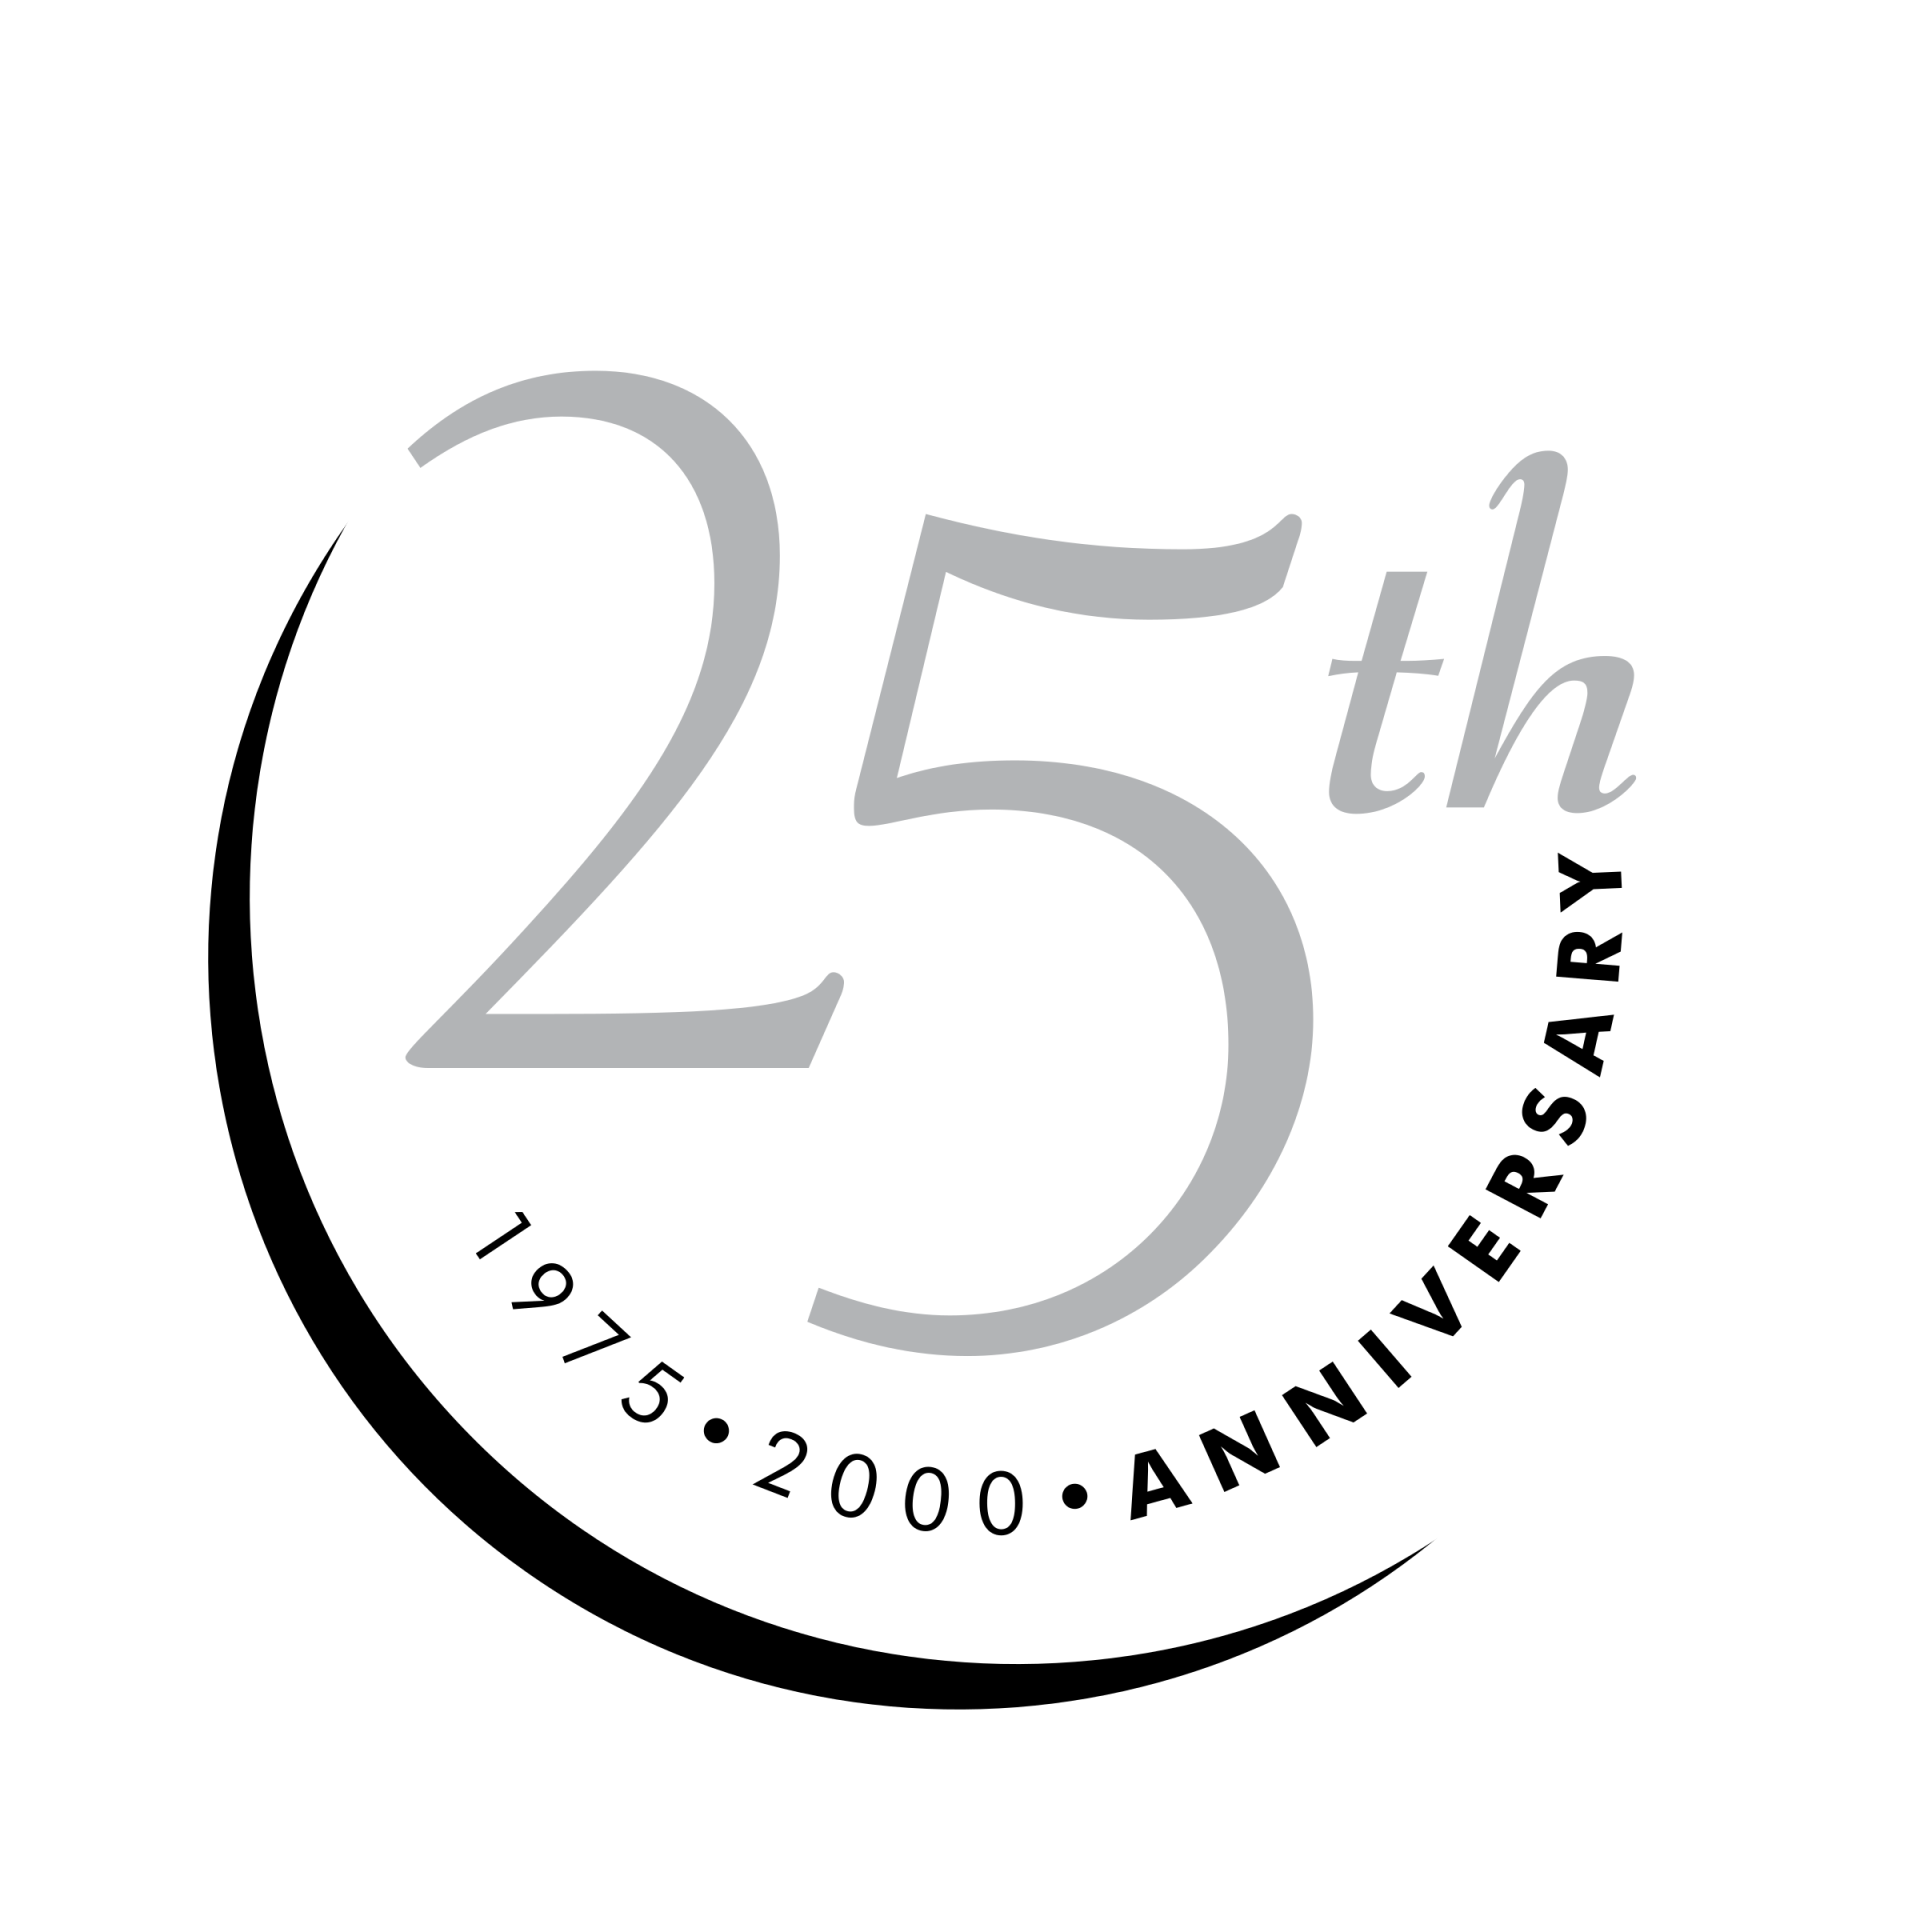 25th anniversary logo ideas 1